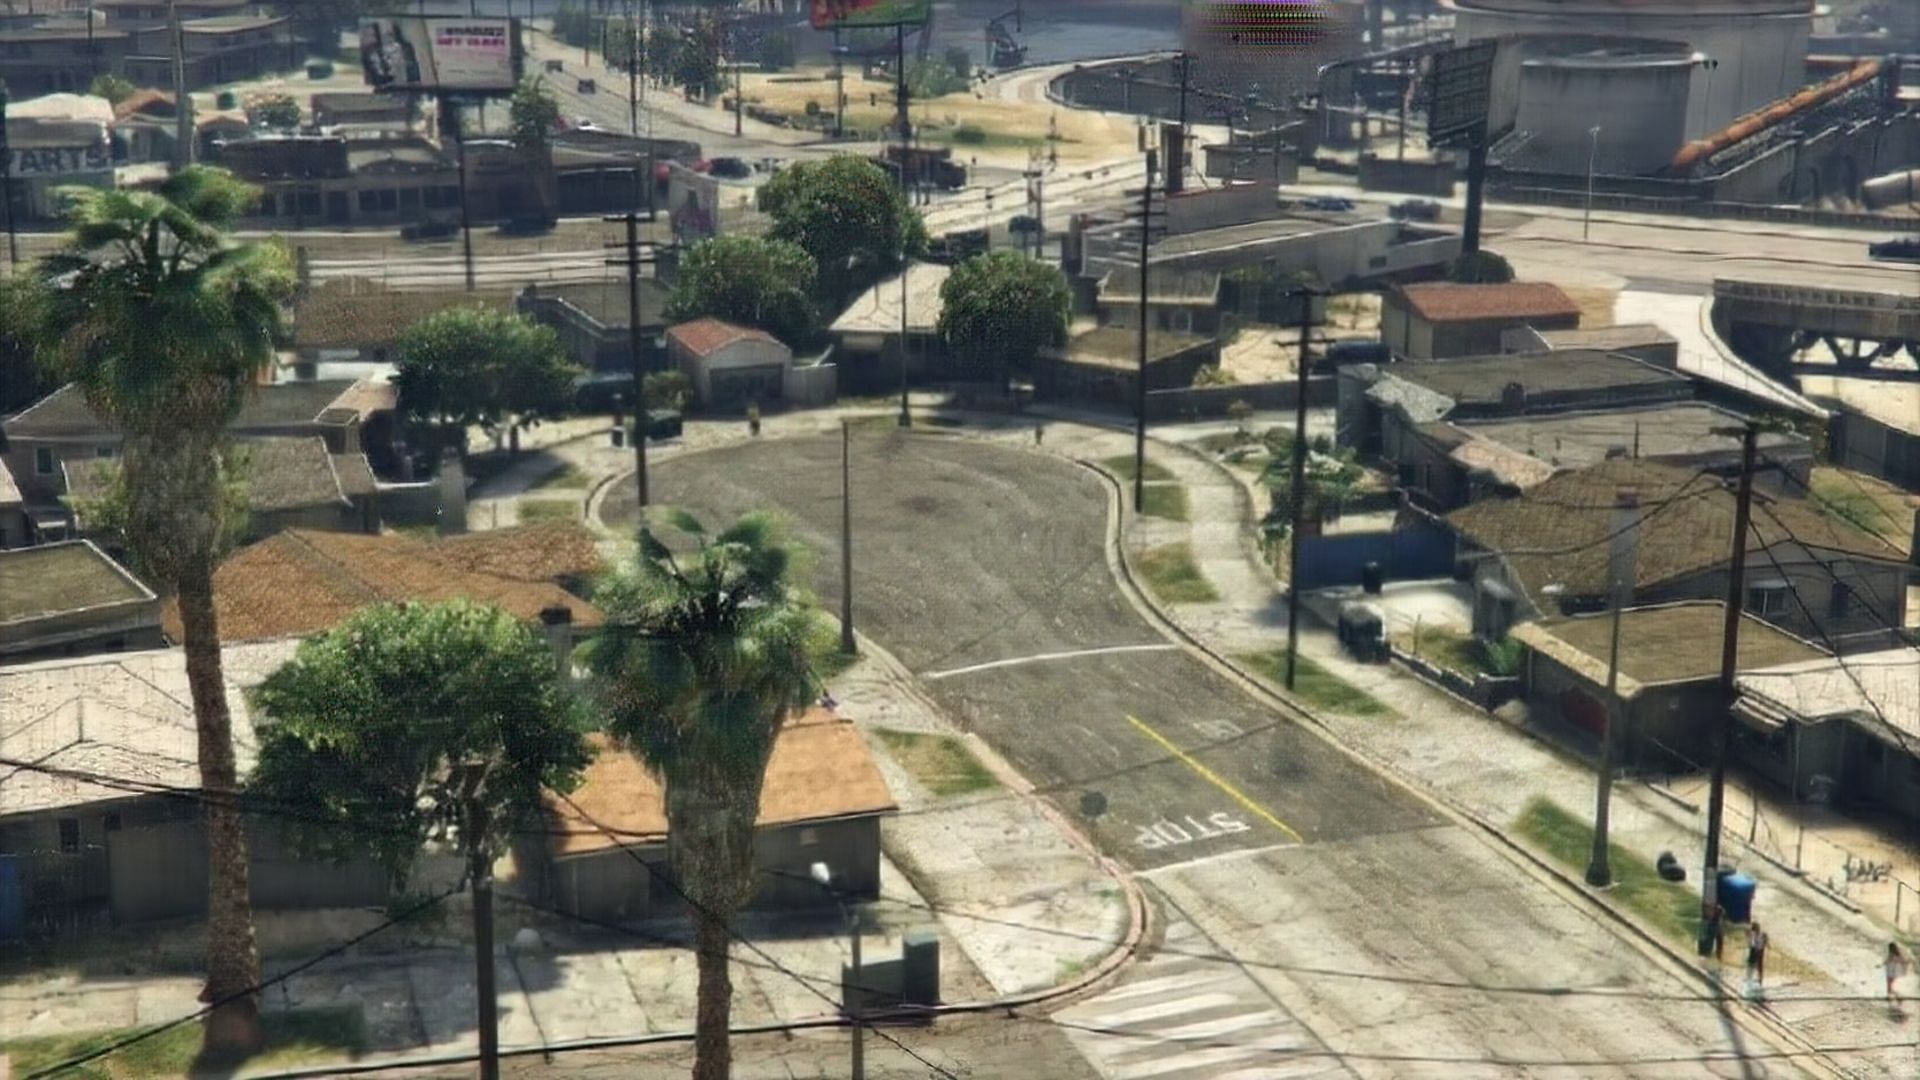 Grove street as seen in GTA 5. (Image via Rockstar Games)